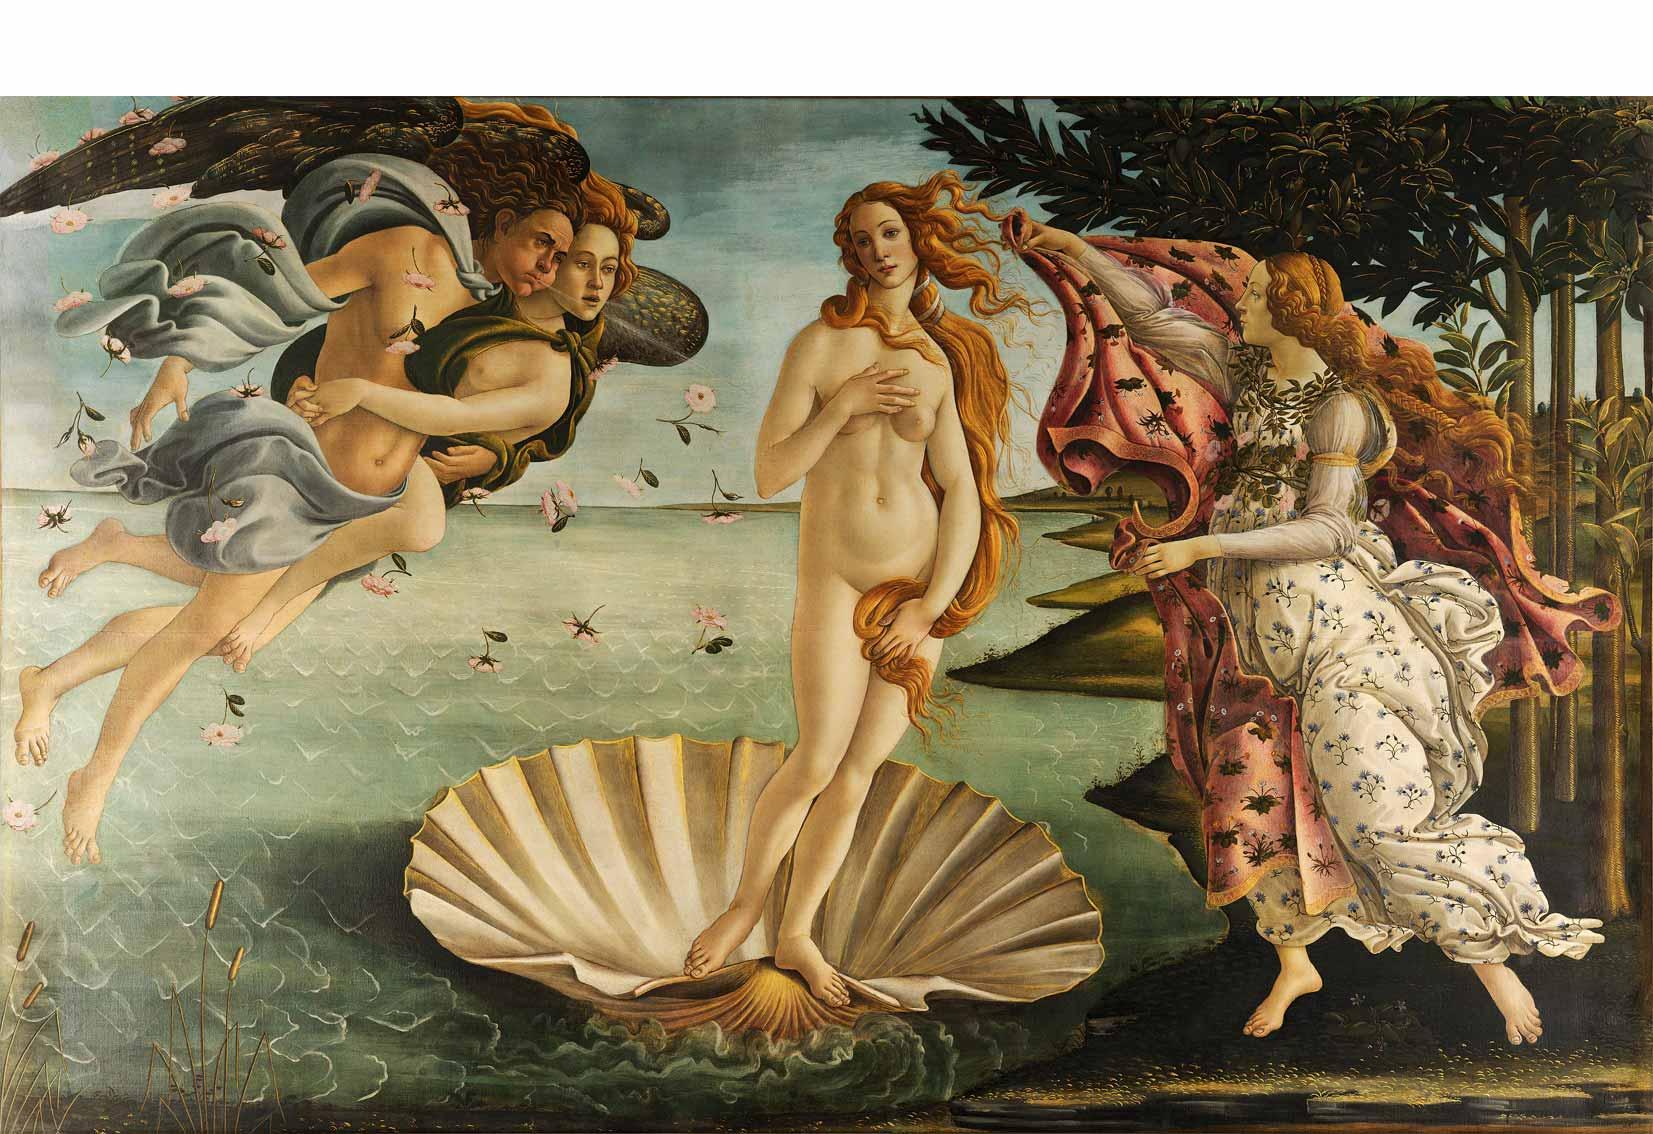 Sandro Botticelli, The Birth of Venus, c. 1484–1486.